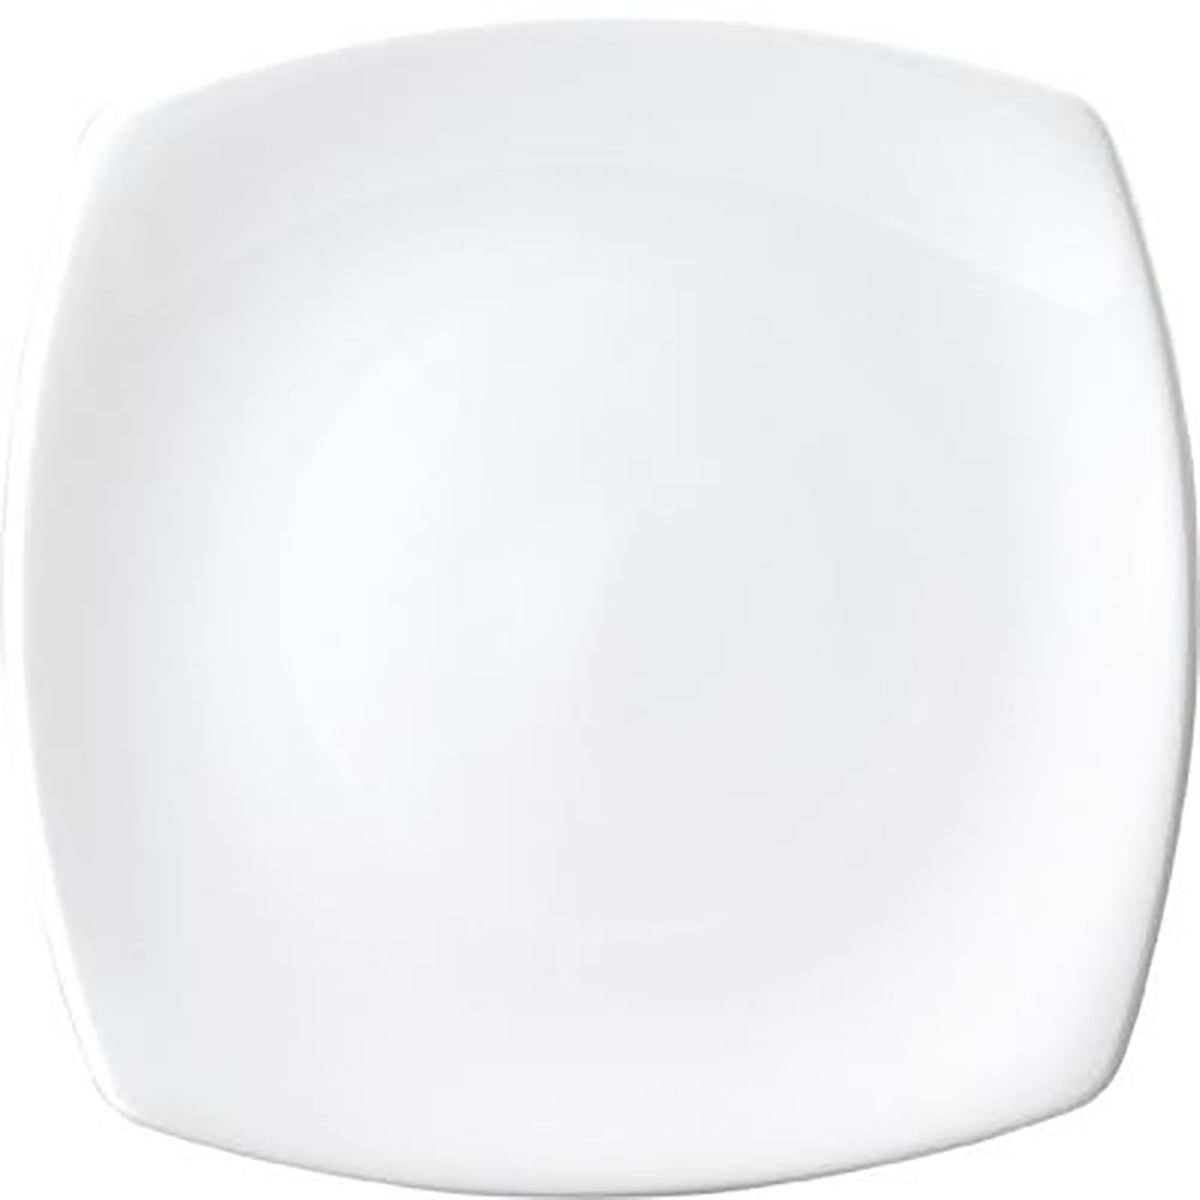 94406 Royal Porcelain Chelsea Square Plate Flat 300x300mm (4106) Tomkin Australia Hospitality Supplies